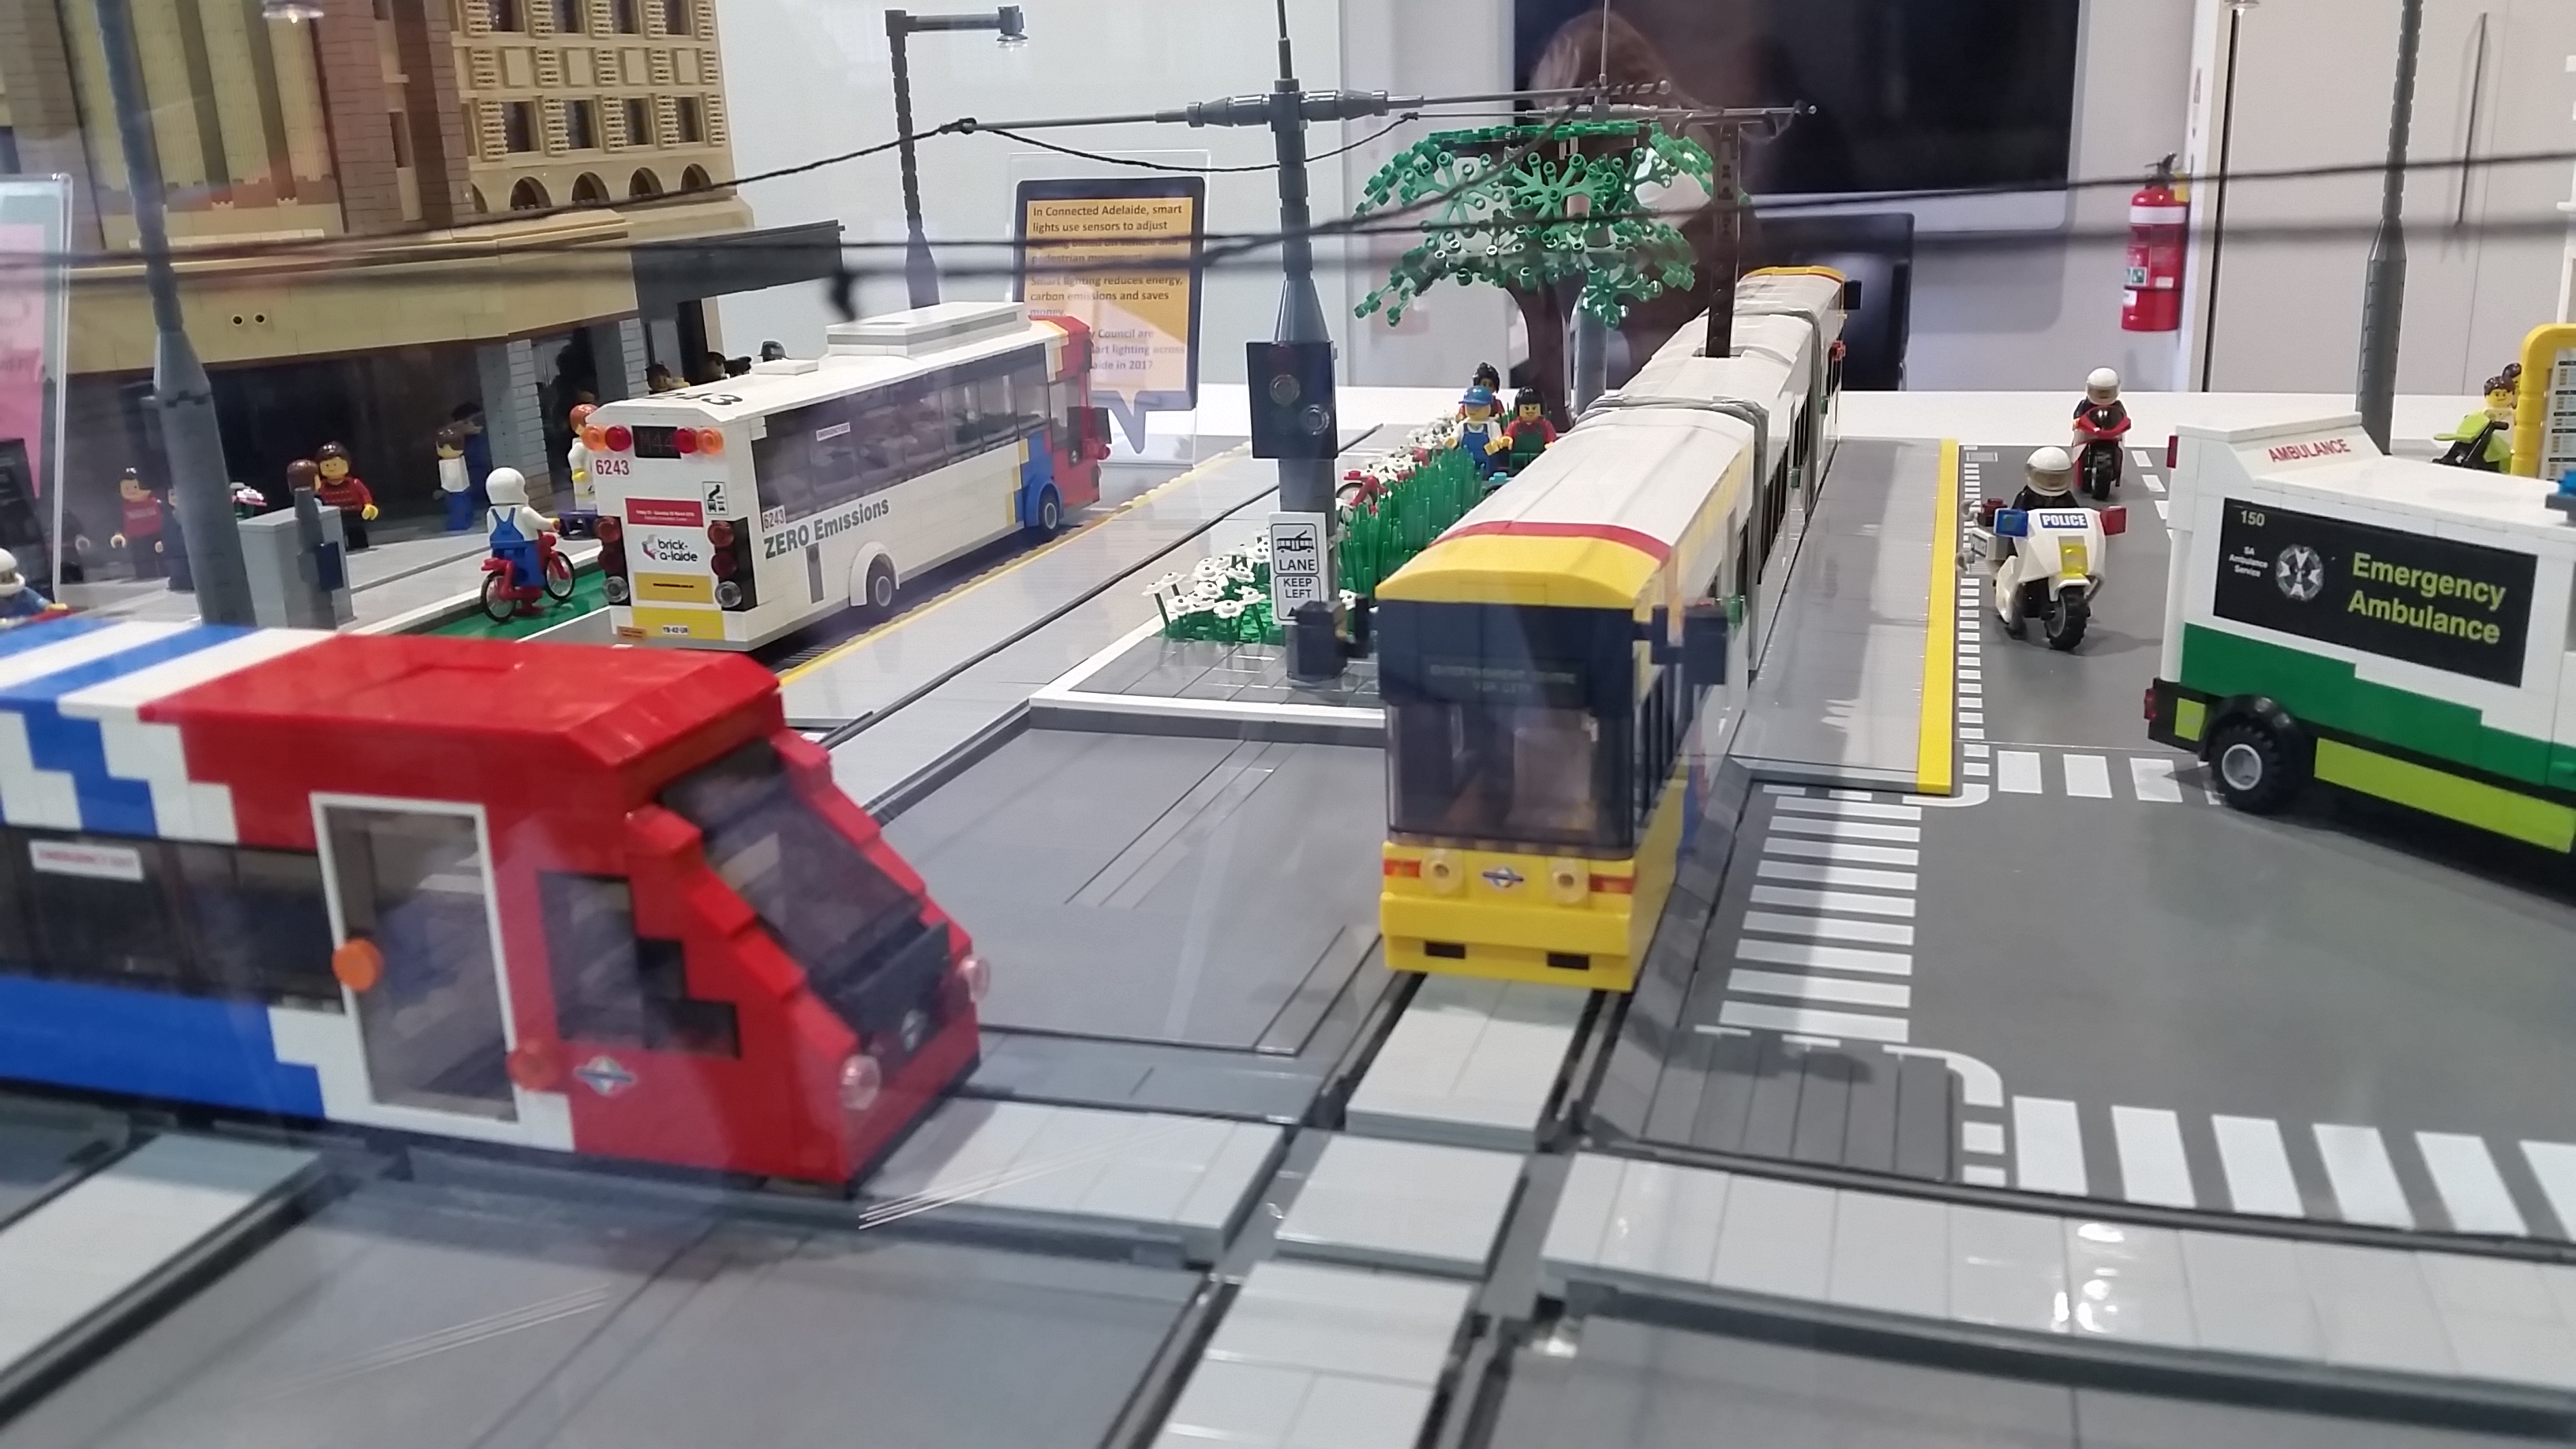 Melbourne PTV Bus Custom LEGO Model